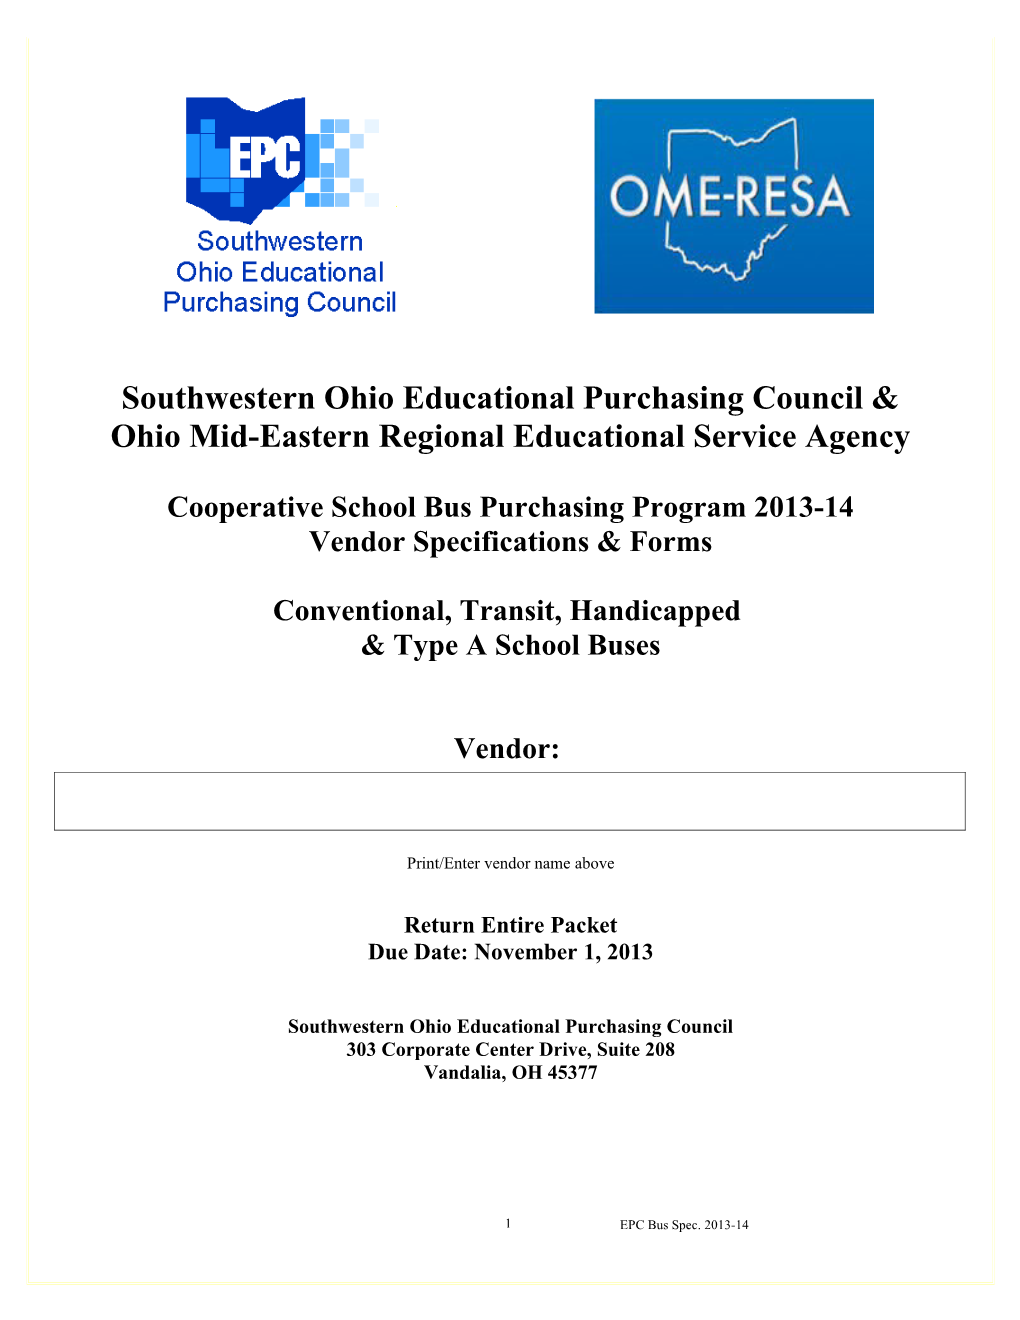 Cooperative School Bus Purchasing Program 2013-14